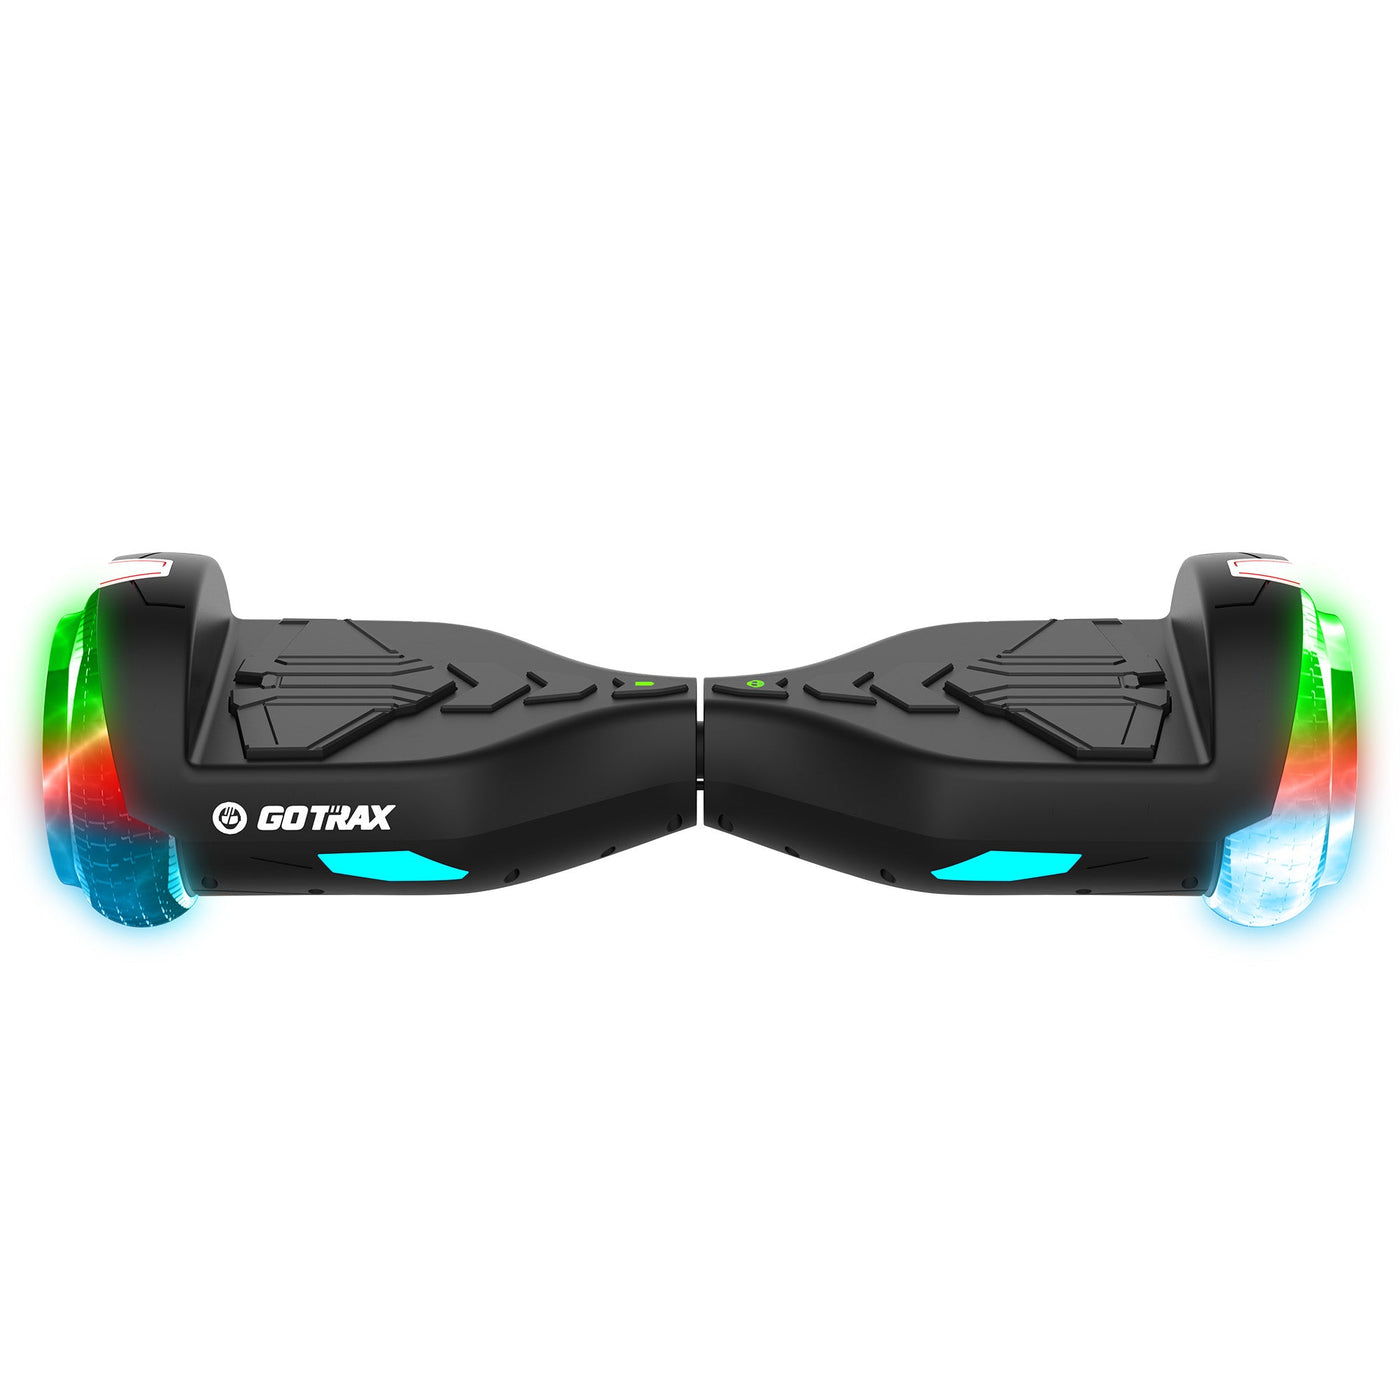 Pulse Lumios LED Wheel Hoverboard 6.3" - GOTRAX